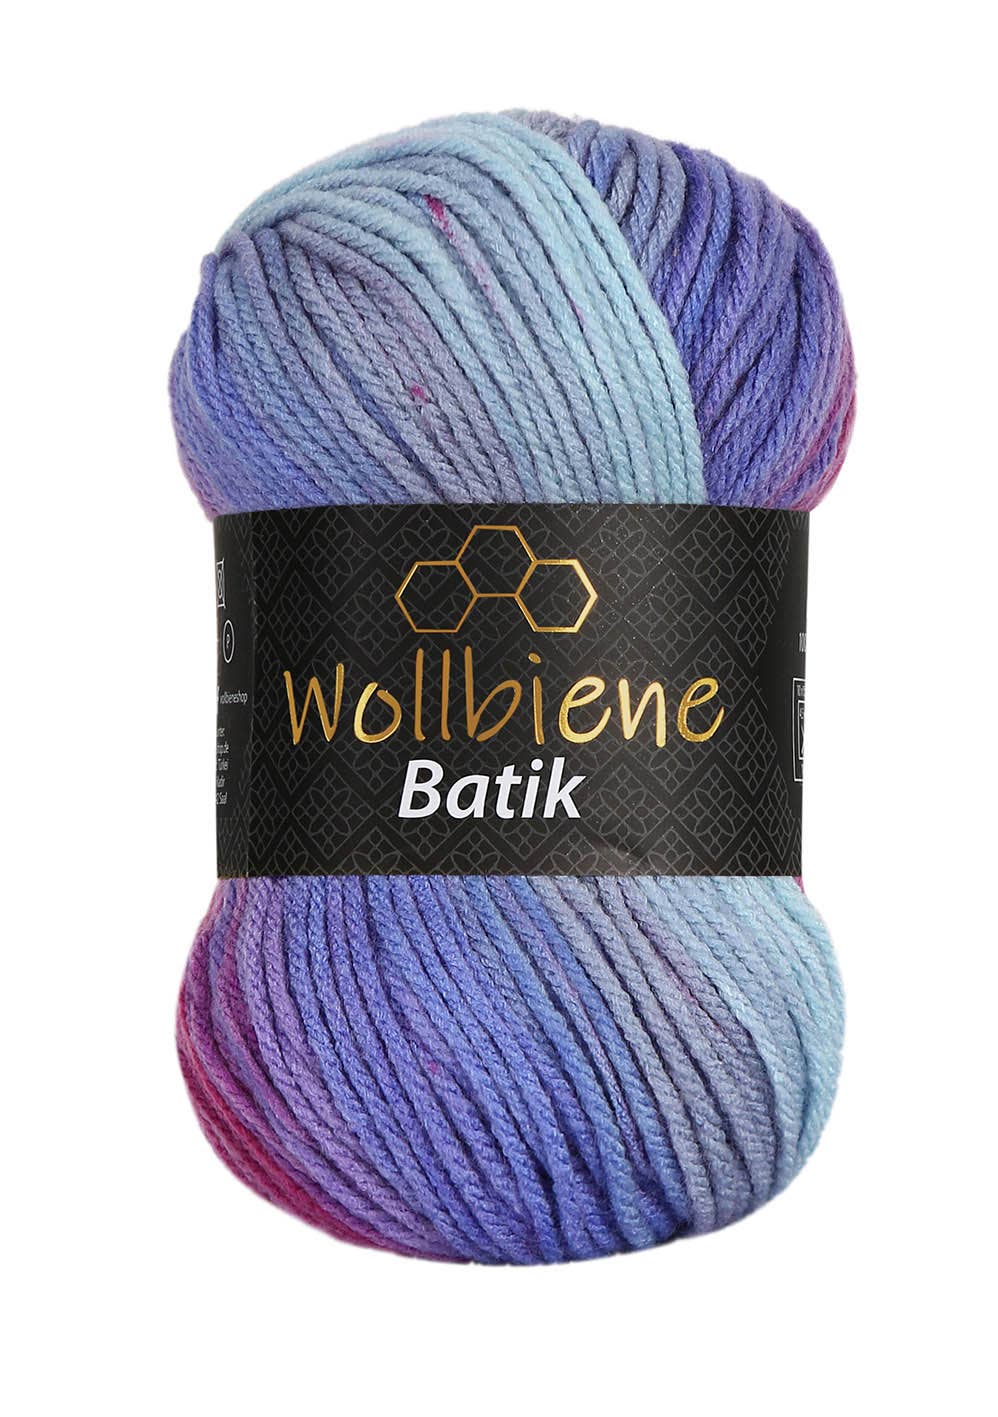 Wollbiene - Wollbiene Batik Farbverlaufswolle Strickwolle - Strelitzia's Florist & Irish Craft Shop